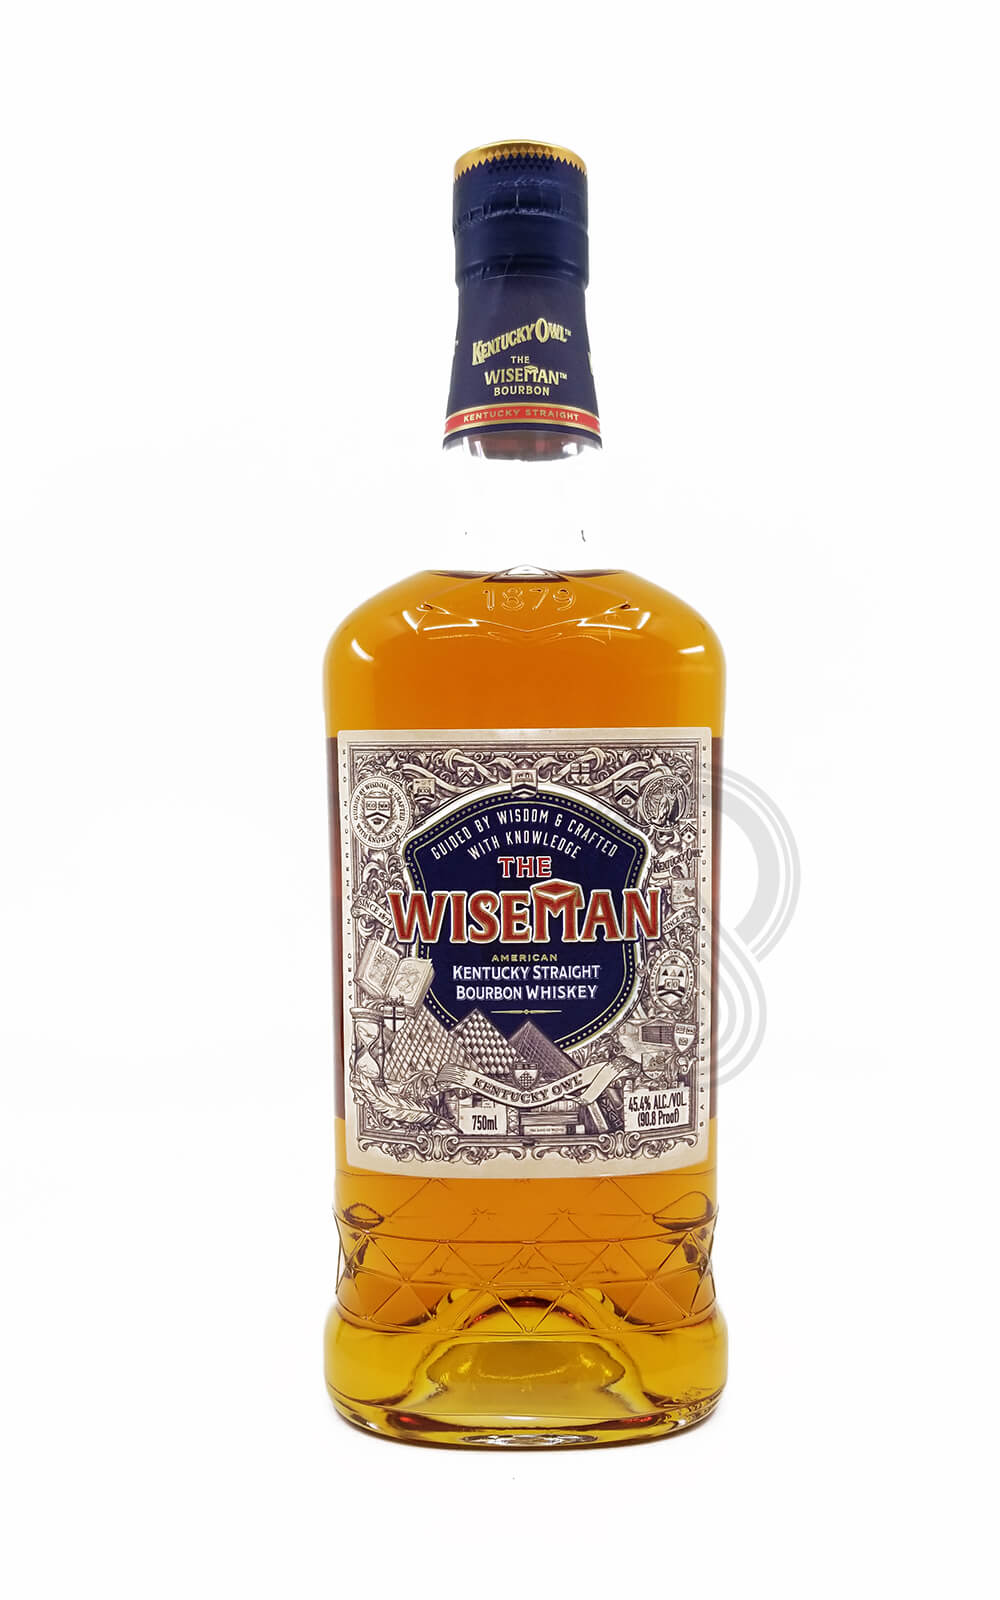 Kentucky Owl Wiseman Straight Bourbon